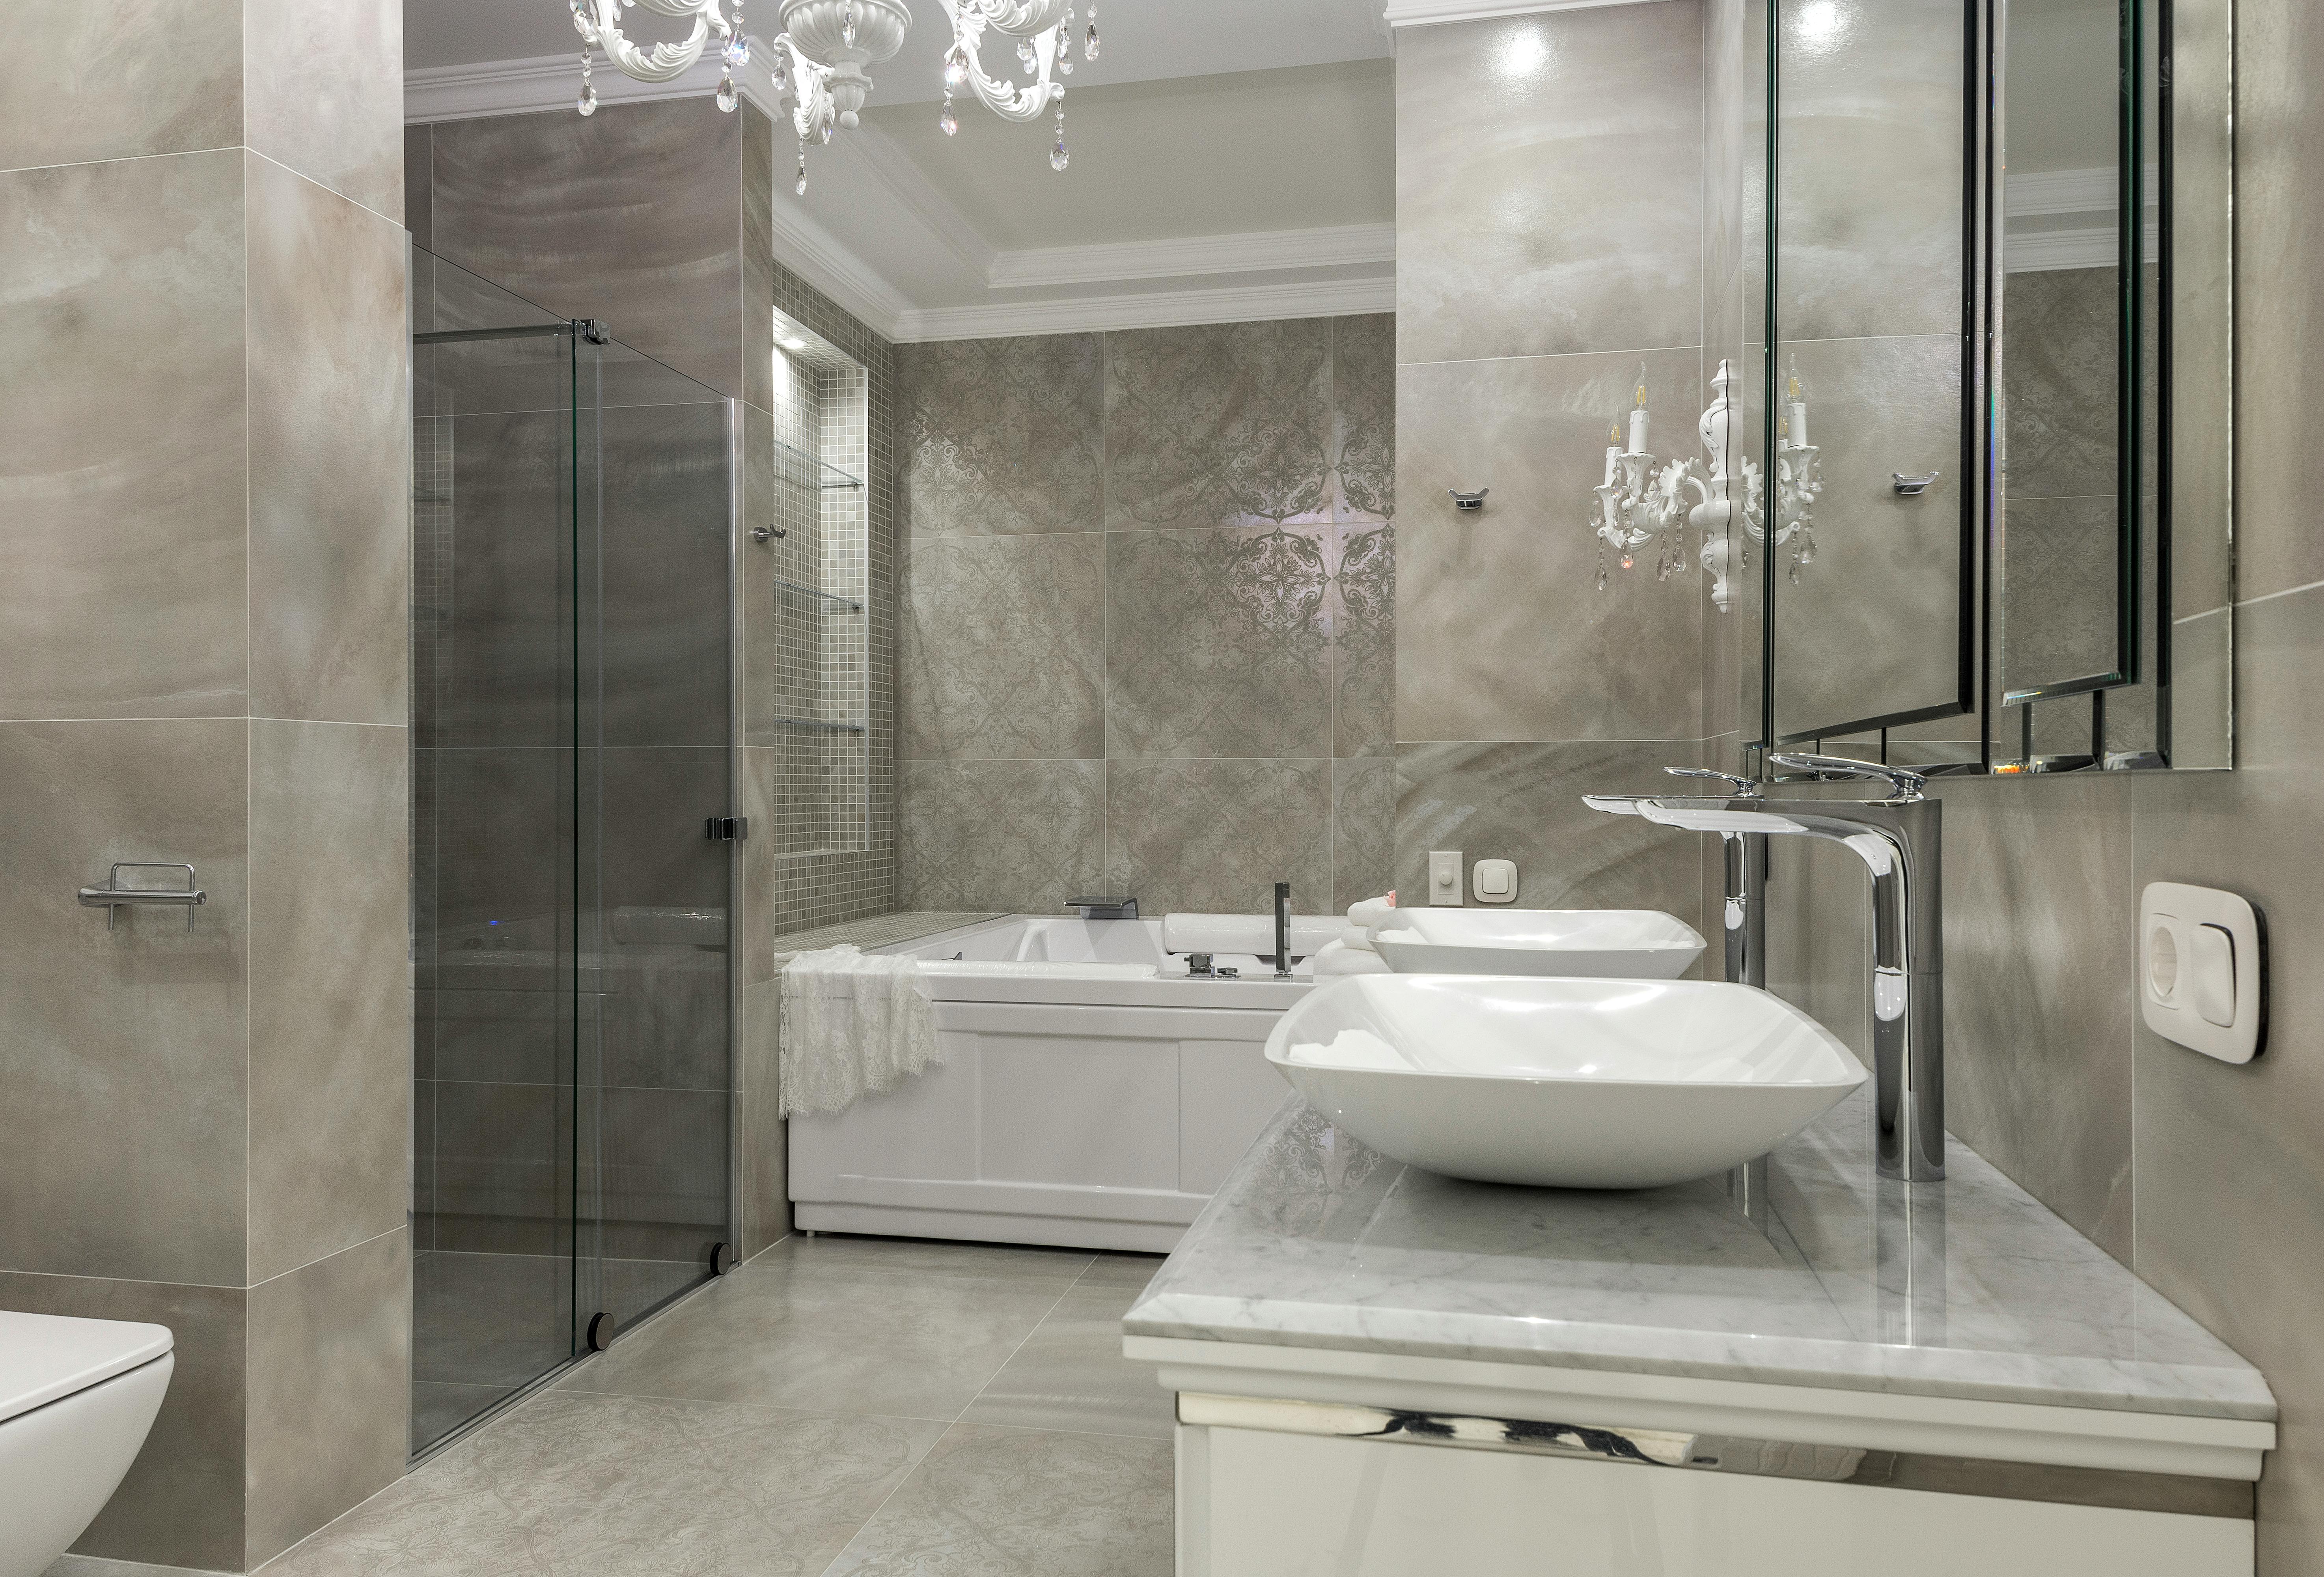 Luxury interior of spacious bathroom with tiled walls and floor double vessel sink vanity and chandelier